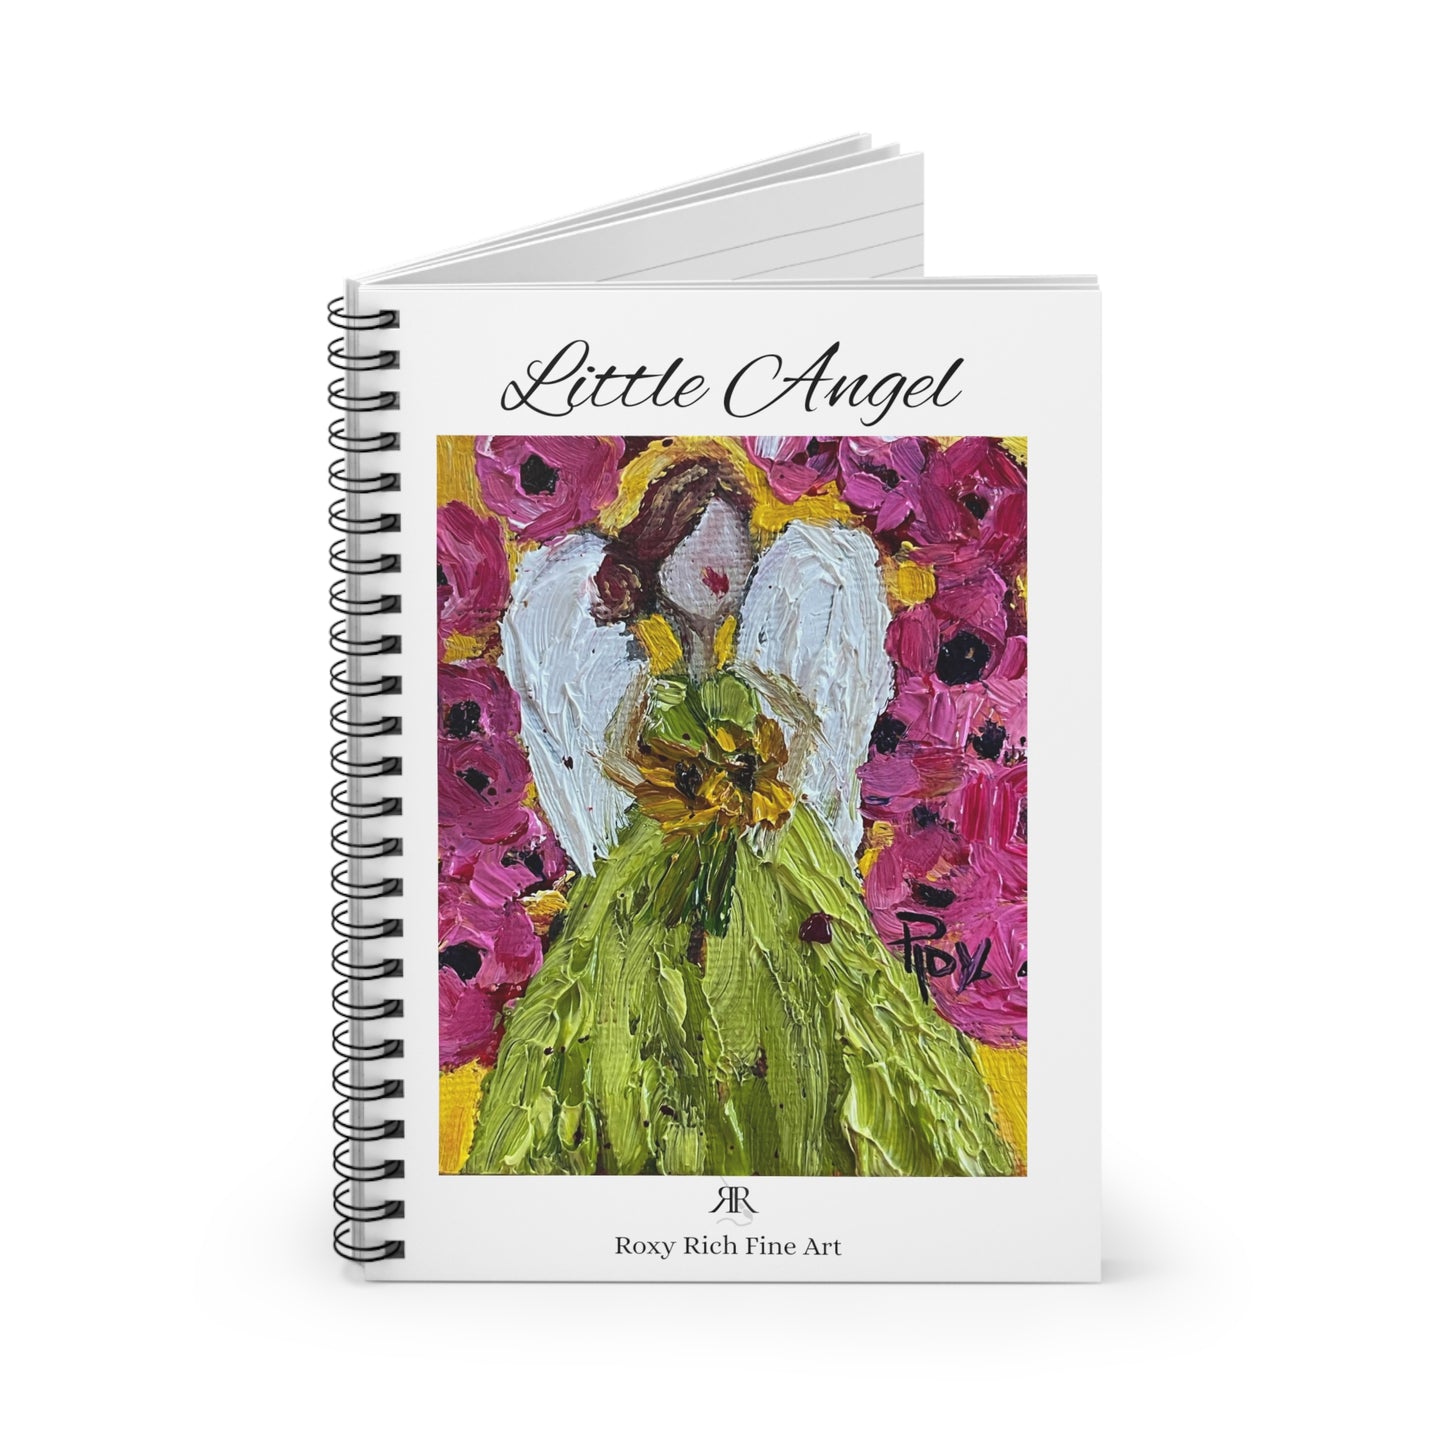 Little Angel " Angel of Blithe" Spiral Notebook